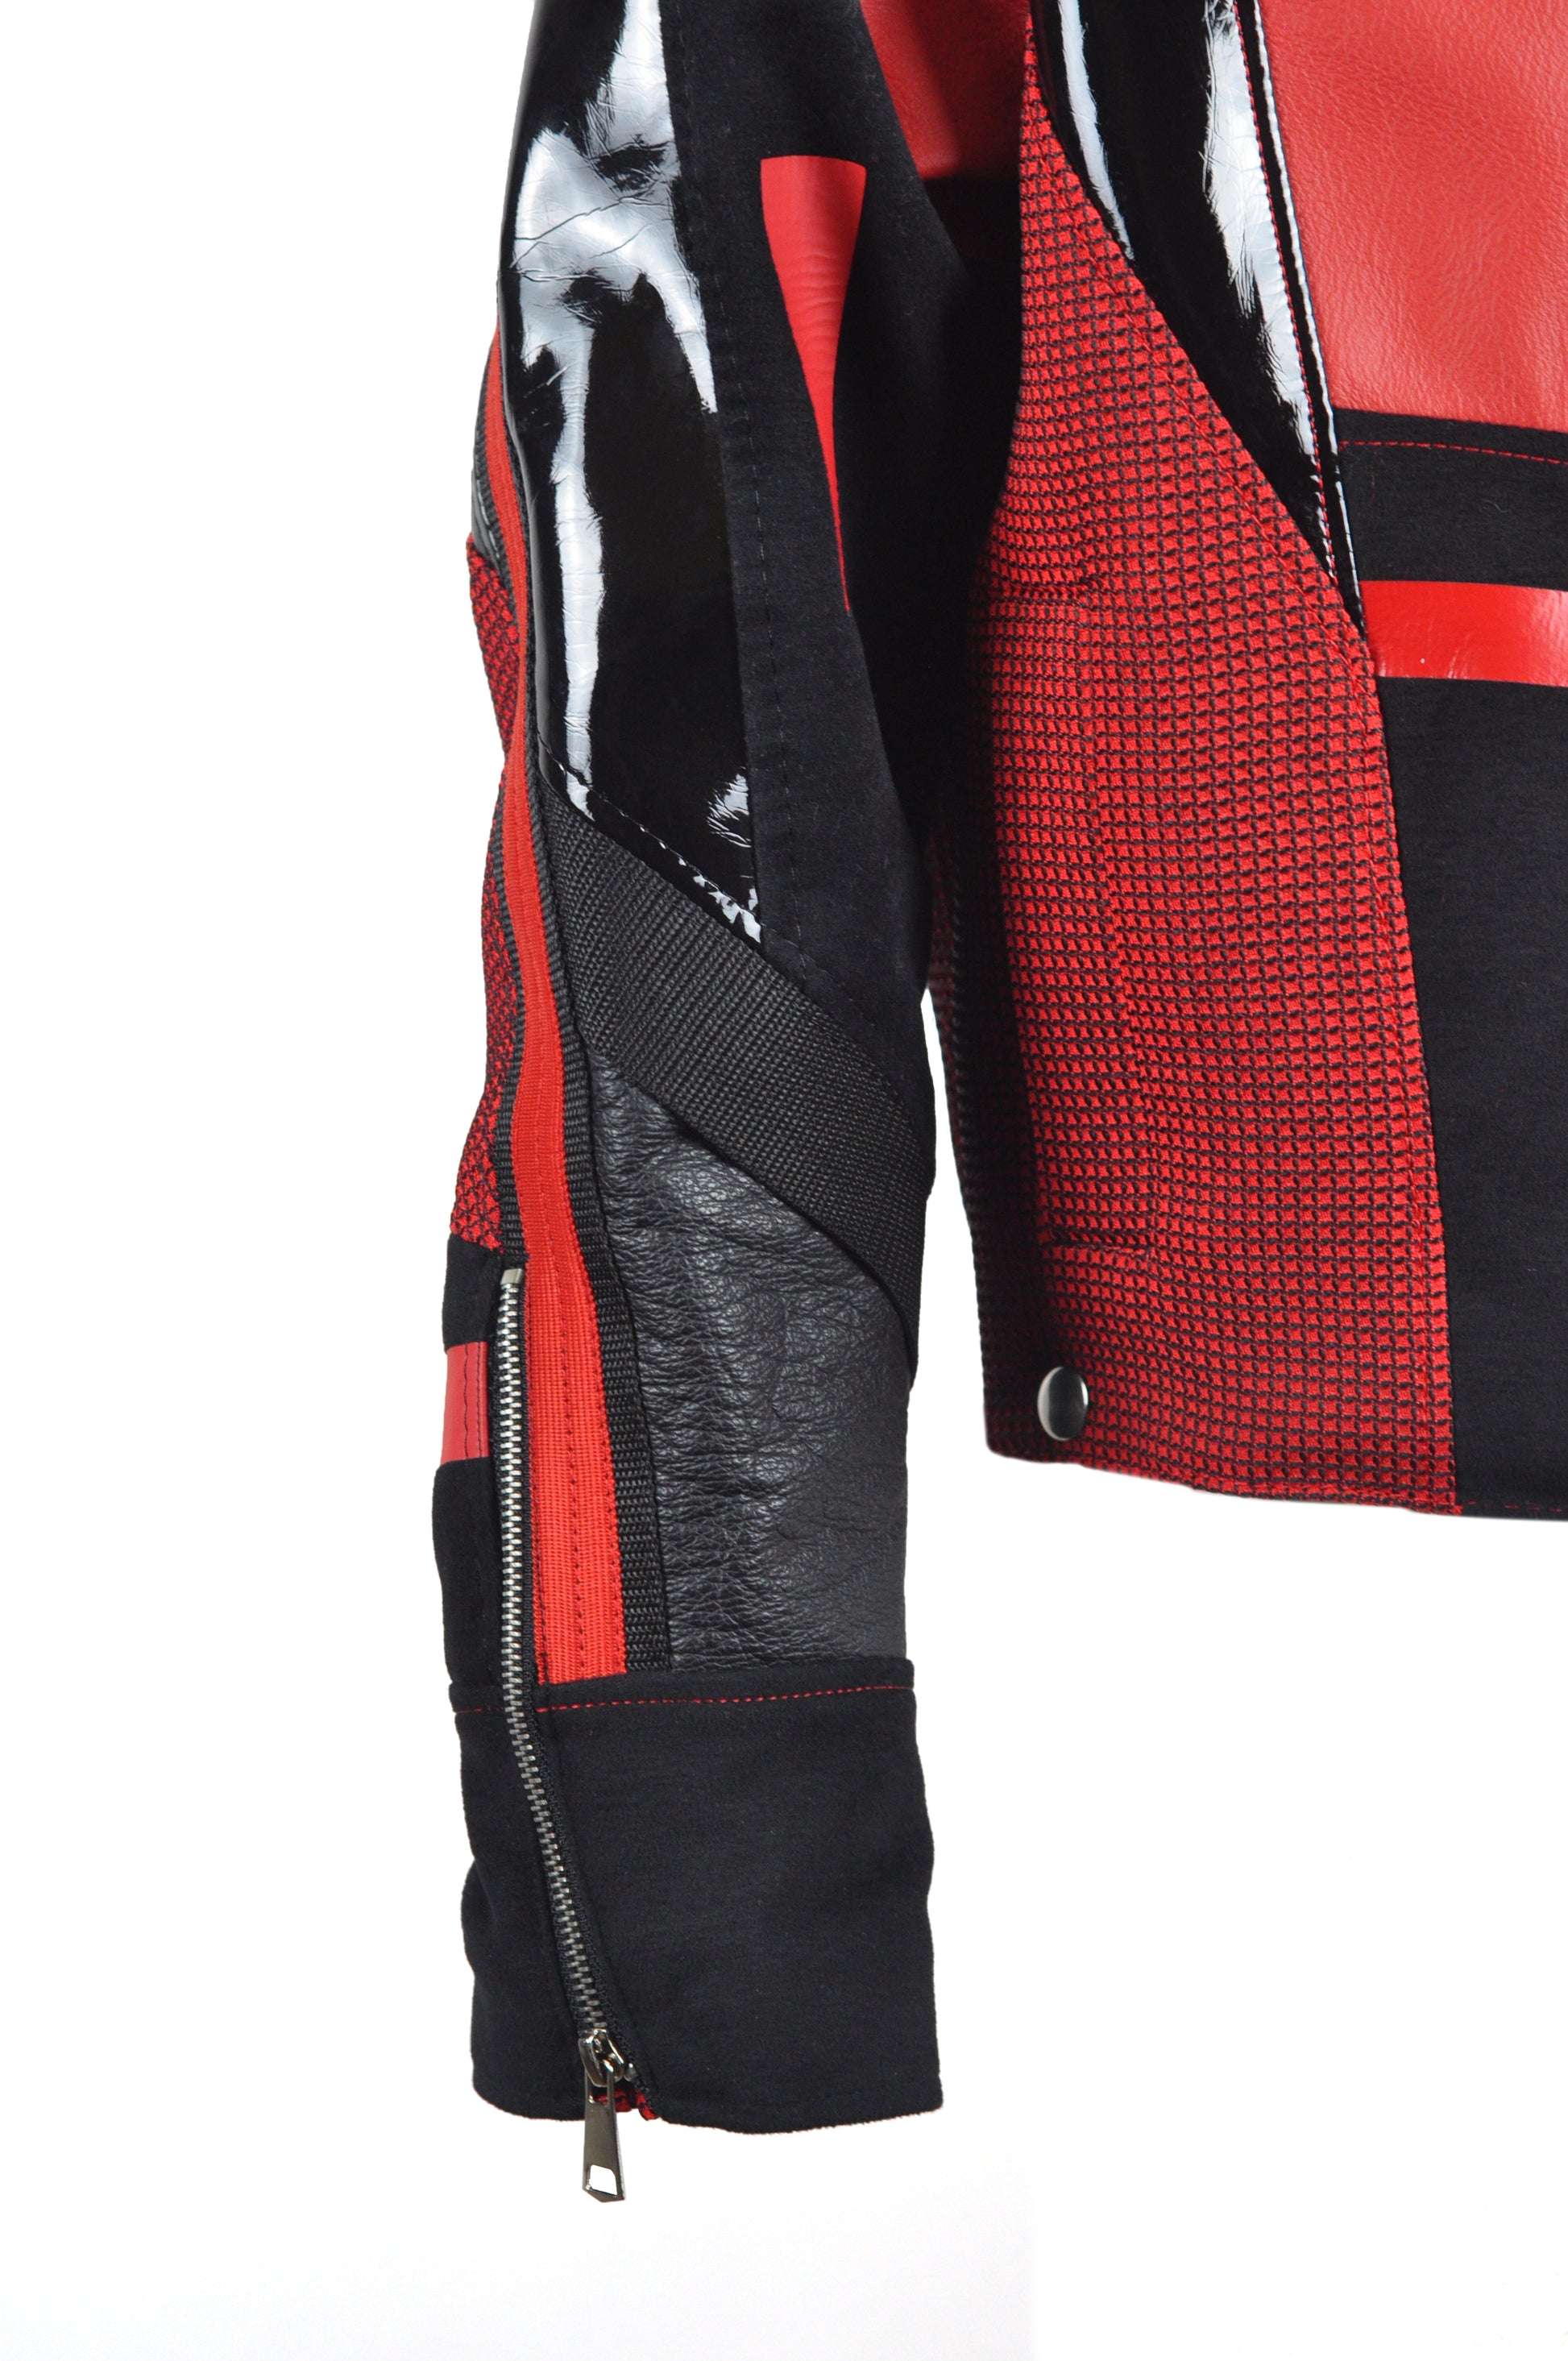 detail van mouw van Red Light Rider jas, techno outfit